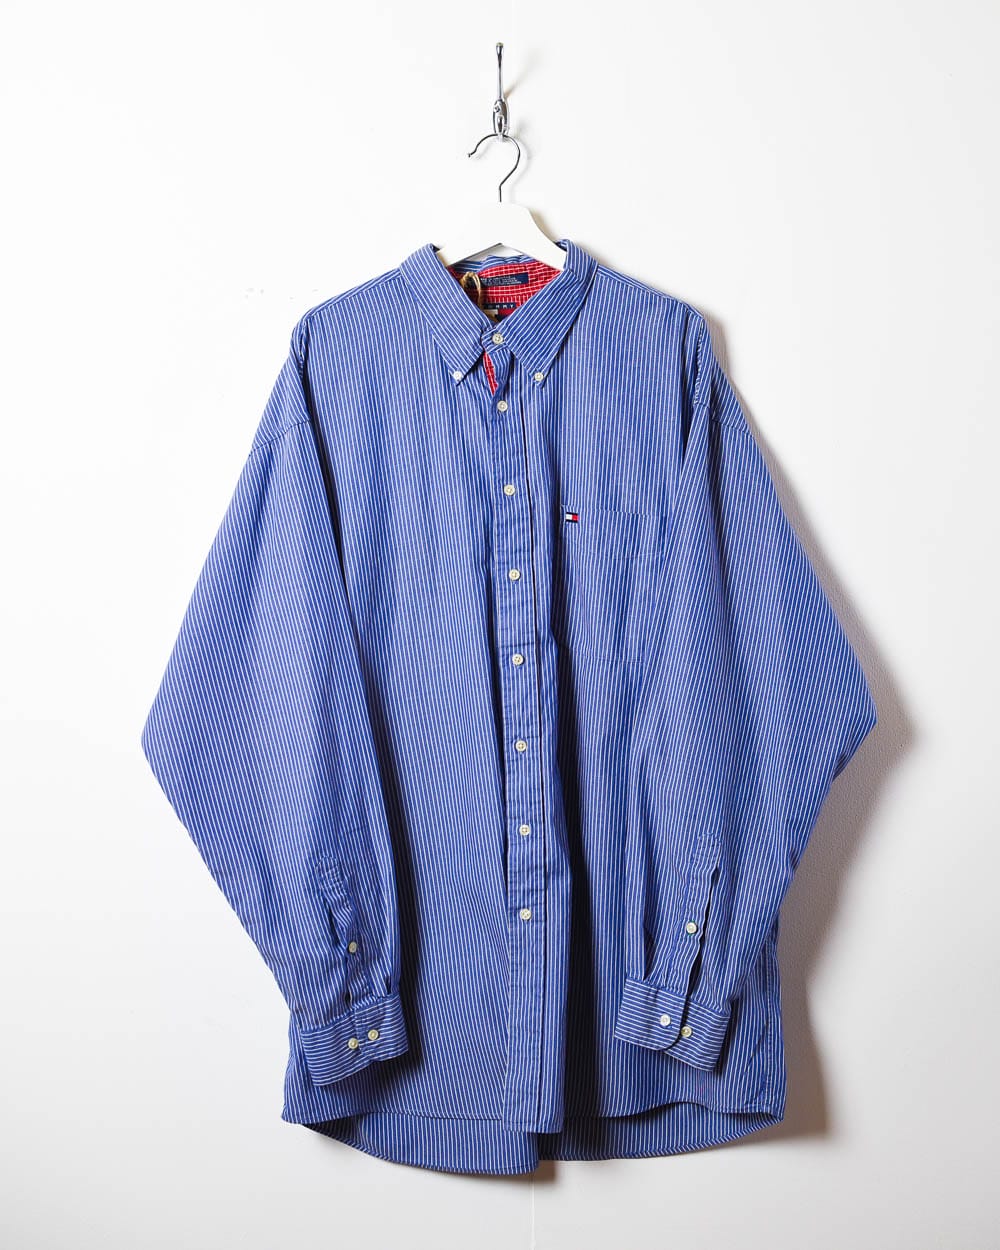 Blue Tommy Hilfiger Striped Shirt - XXX-Large